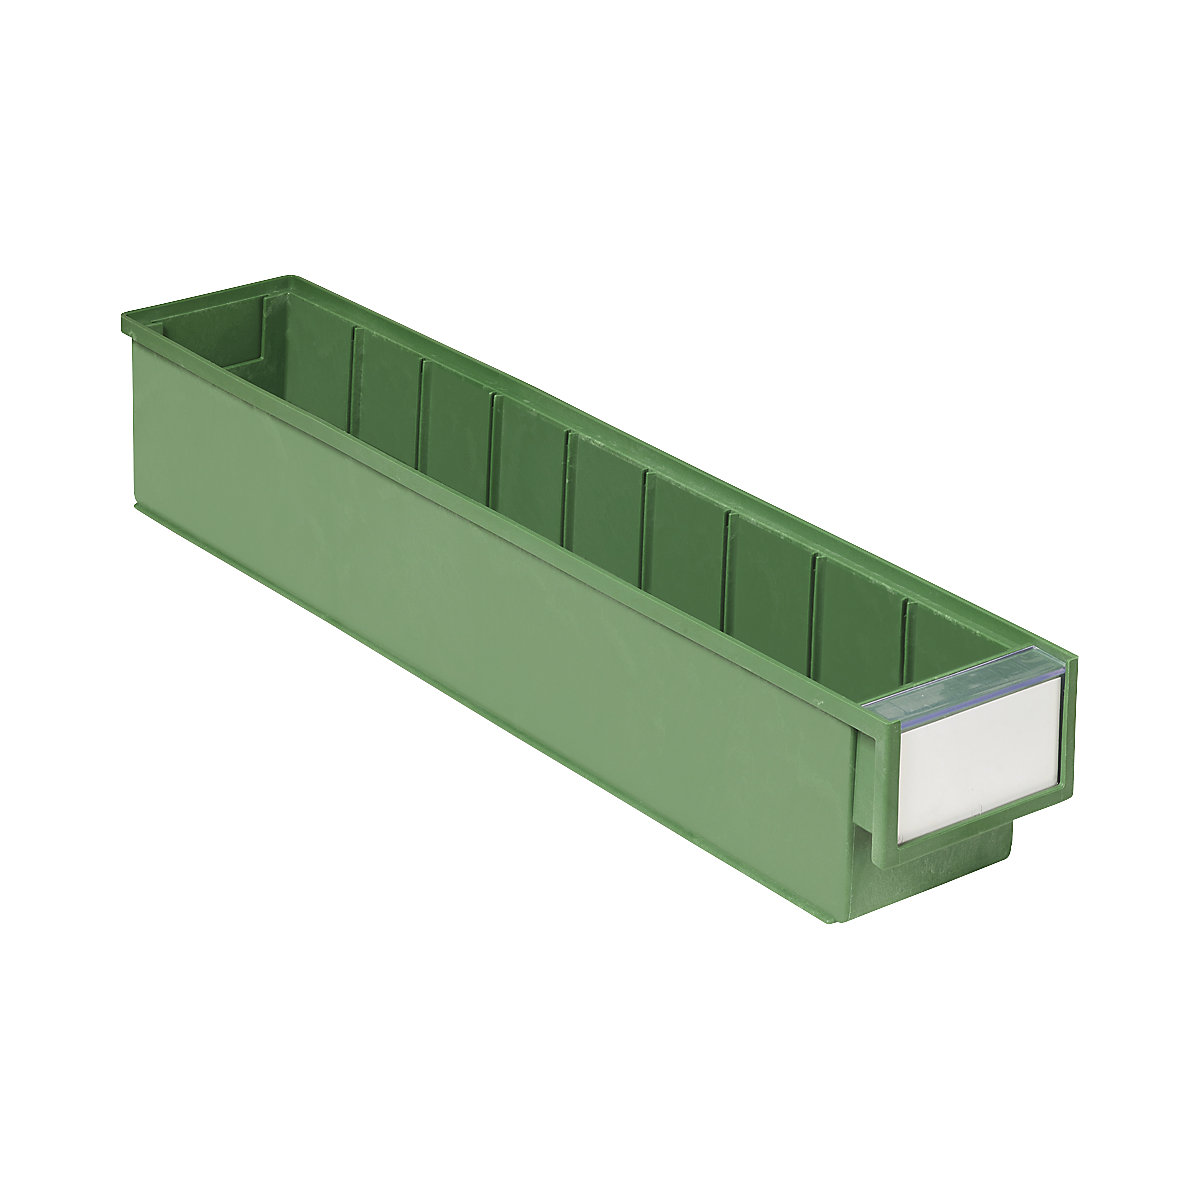 BiOX állványdoboz – Treston, zöld, h x szé x ma 500 x 90 x 82 mm, cs. e. 30 db-2